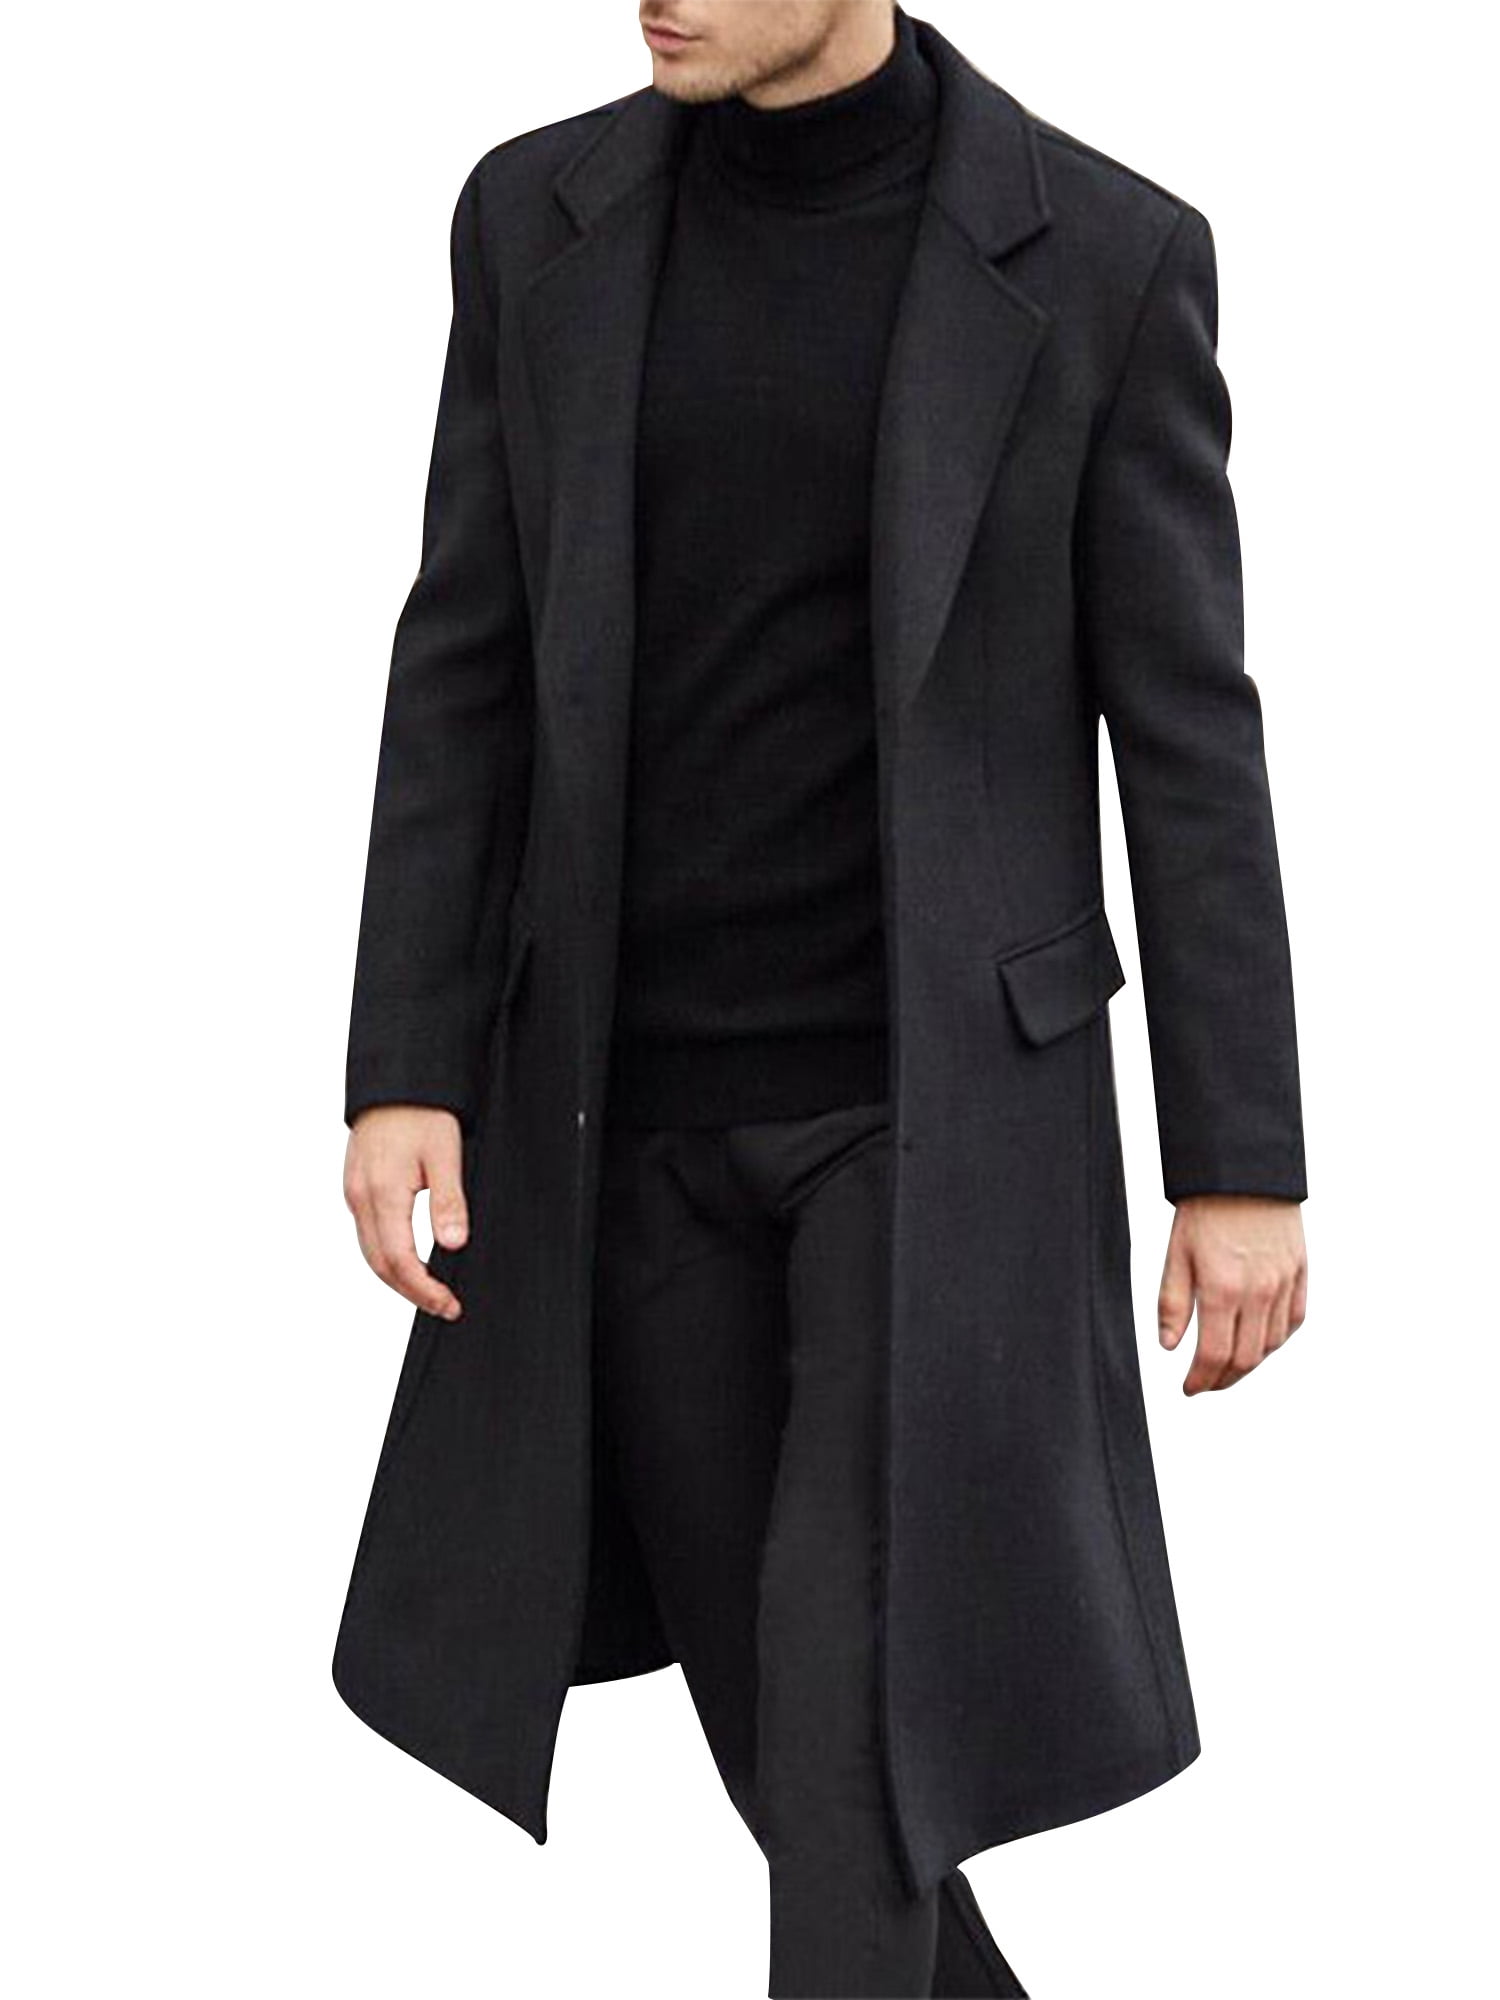 Men's British Jacket Outwear Casual Wool Blend Trench Overcoat Warm Long Coat 